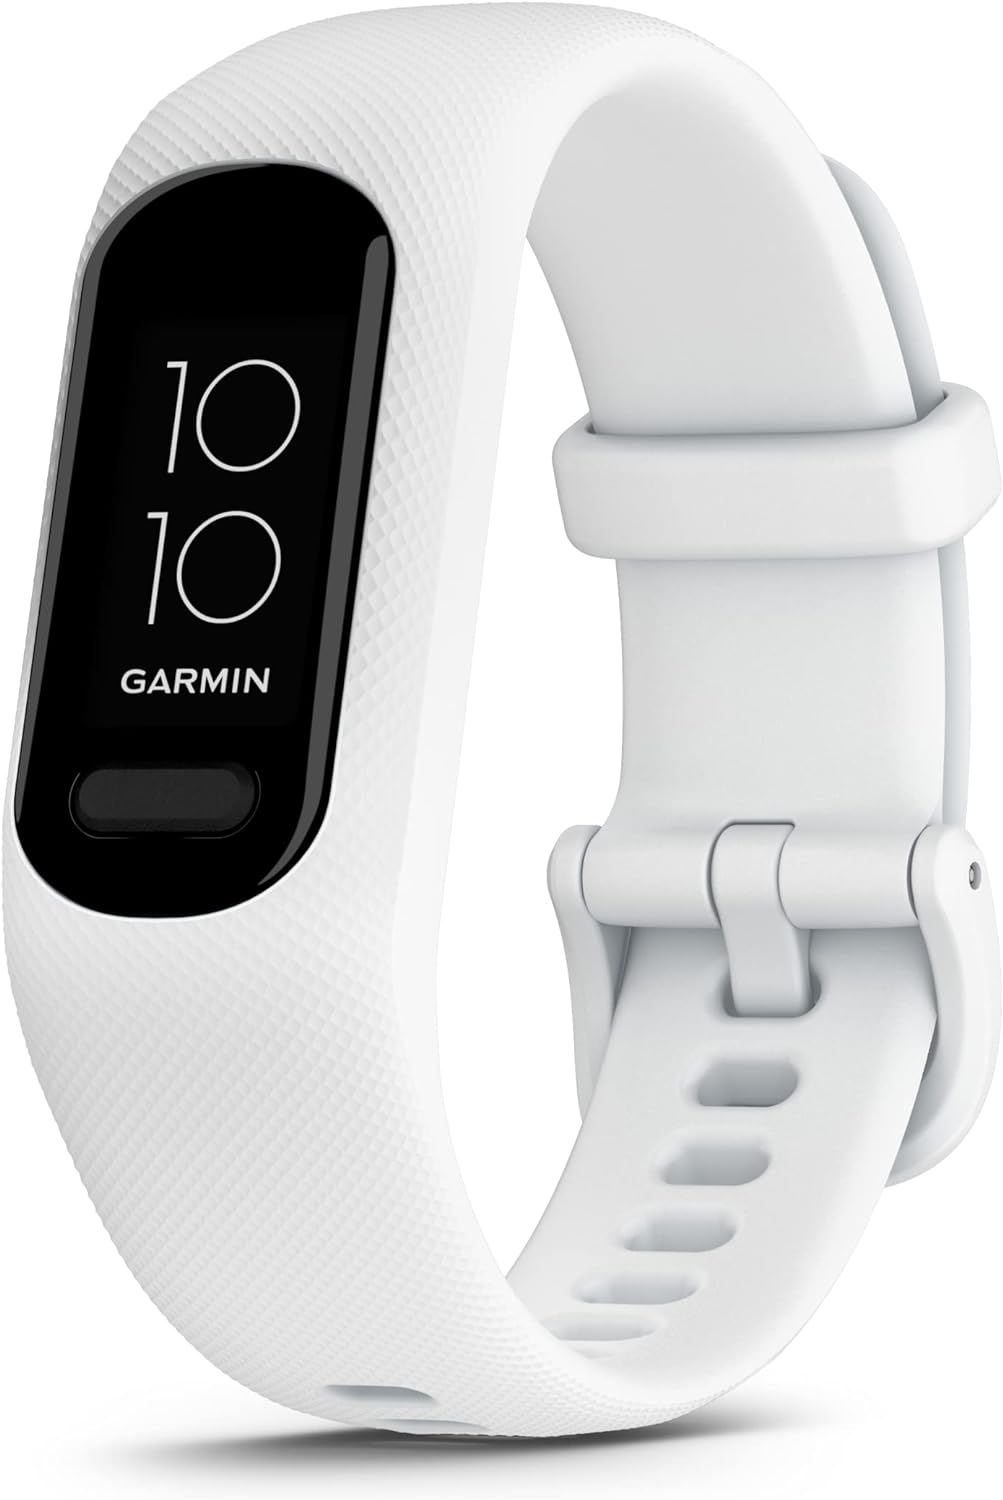 Garmin Vivosmart 5 Review: A Stylish and Efficient Fitness Tracker